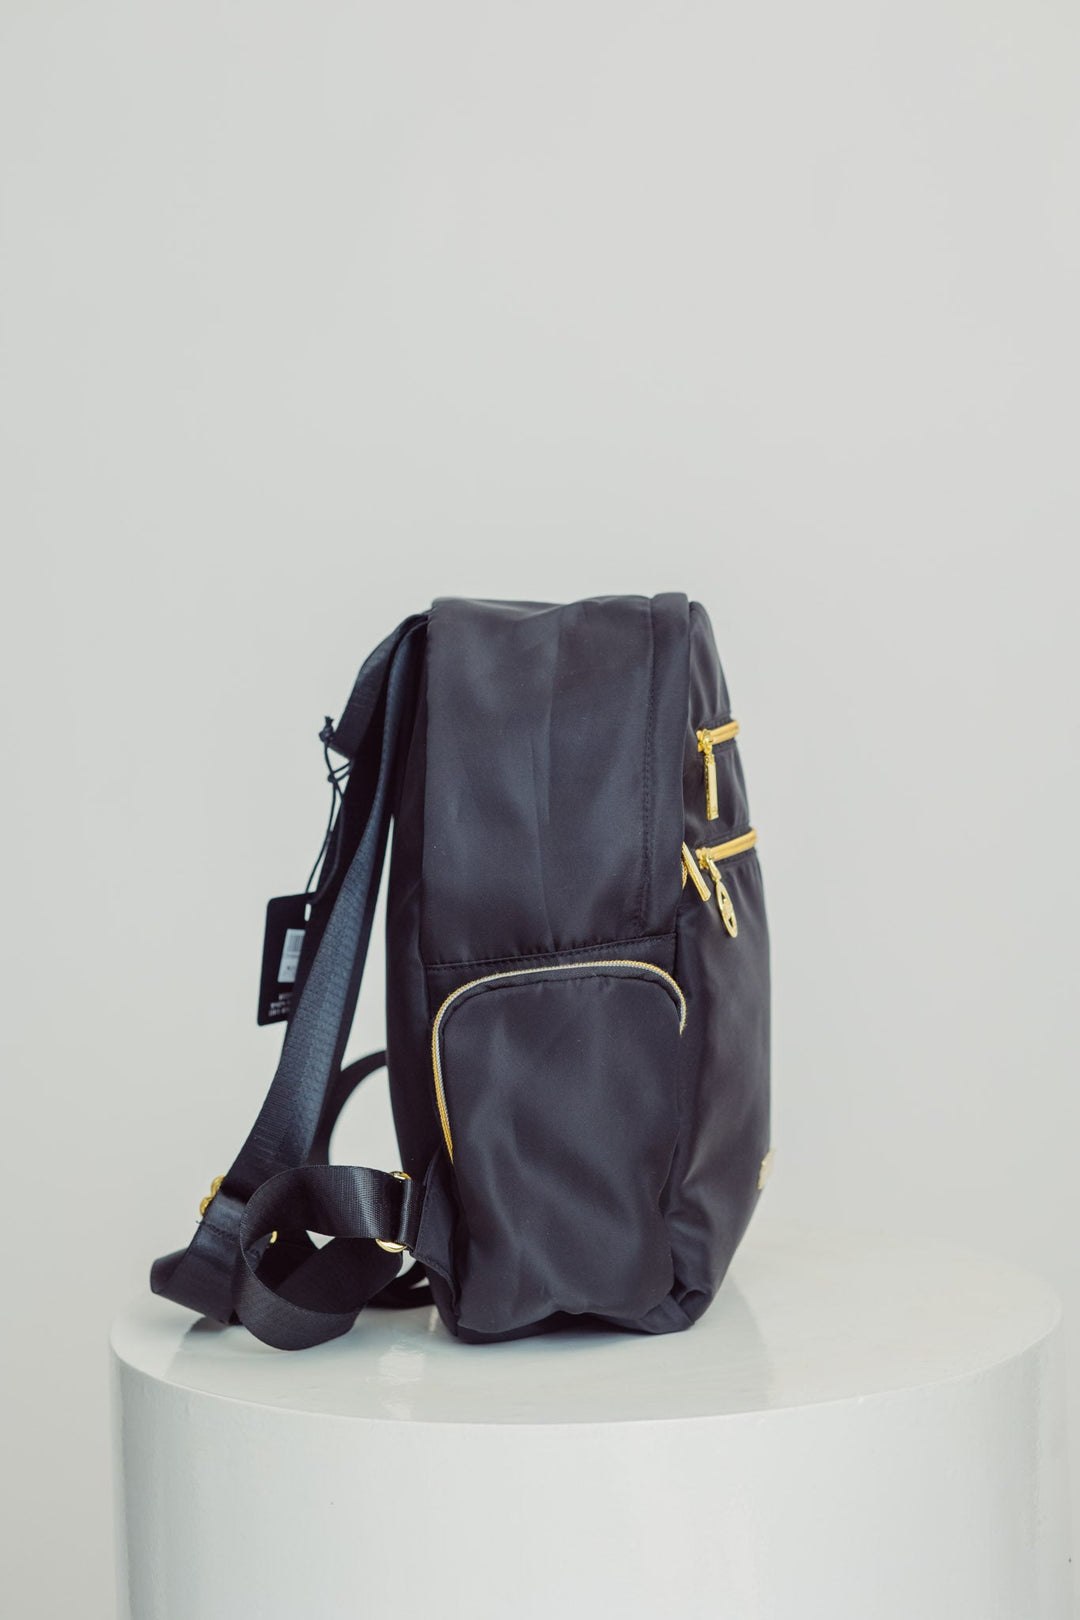 Angel Backpack Black - Mossimo PH